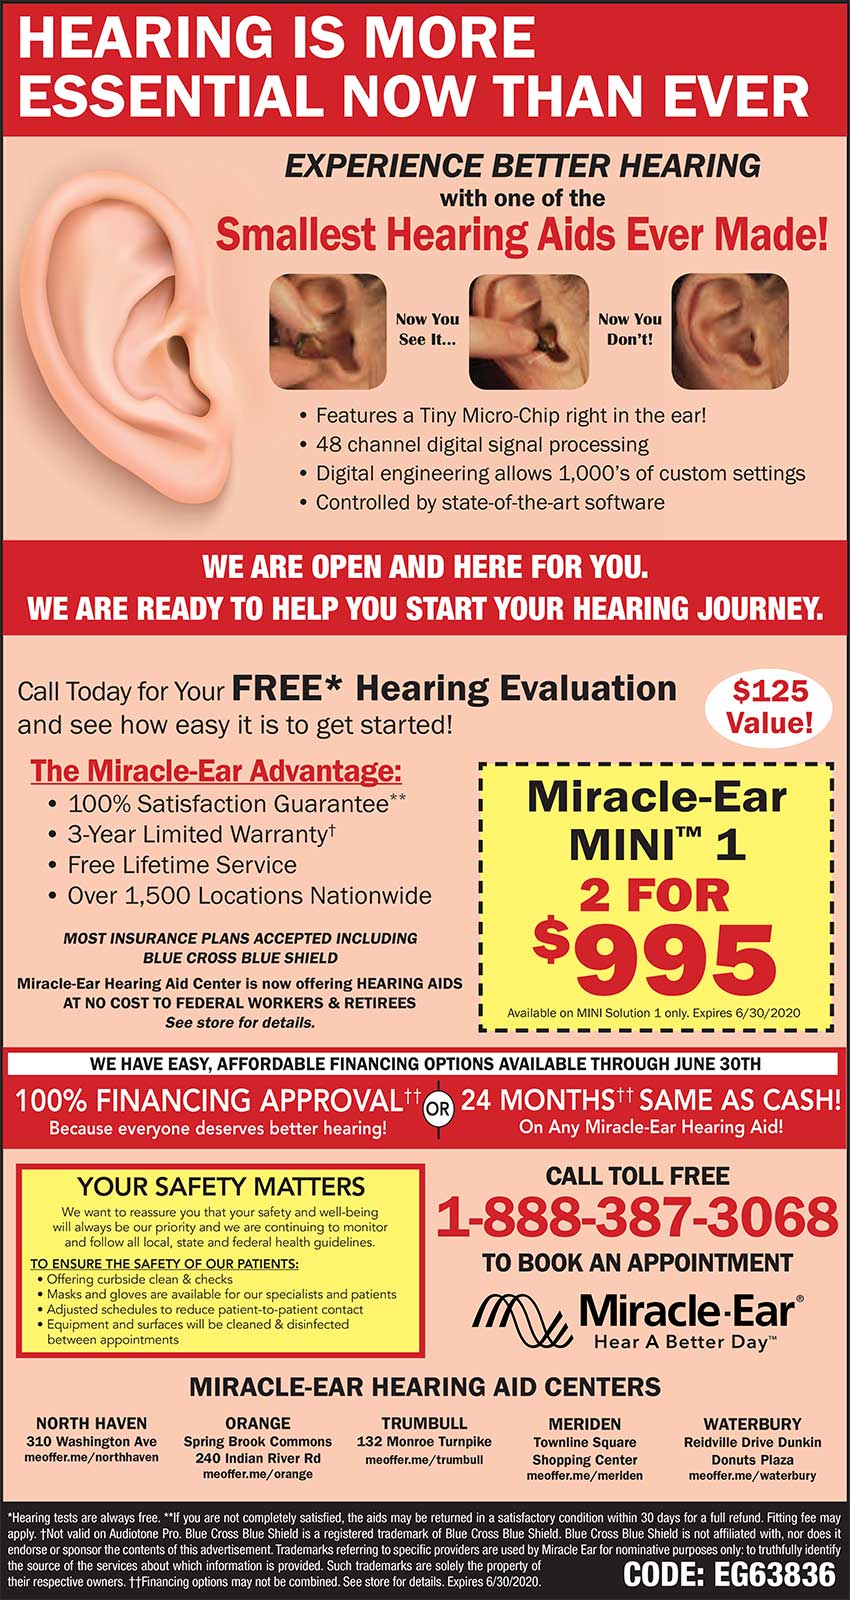 NORTHEAST HEARING-MIRACLE EAR
